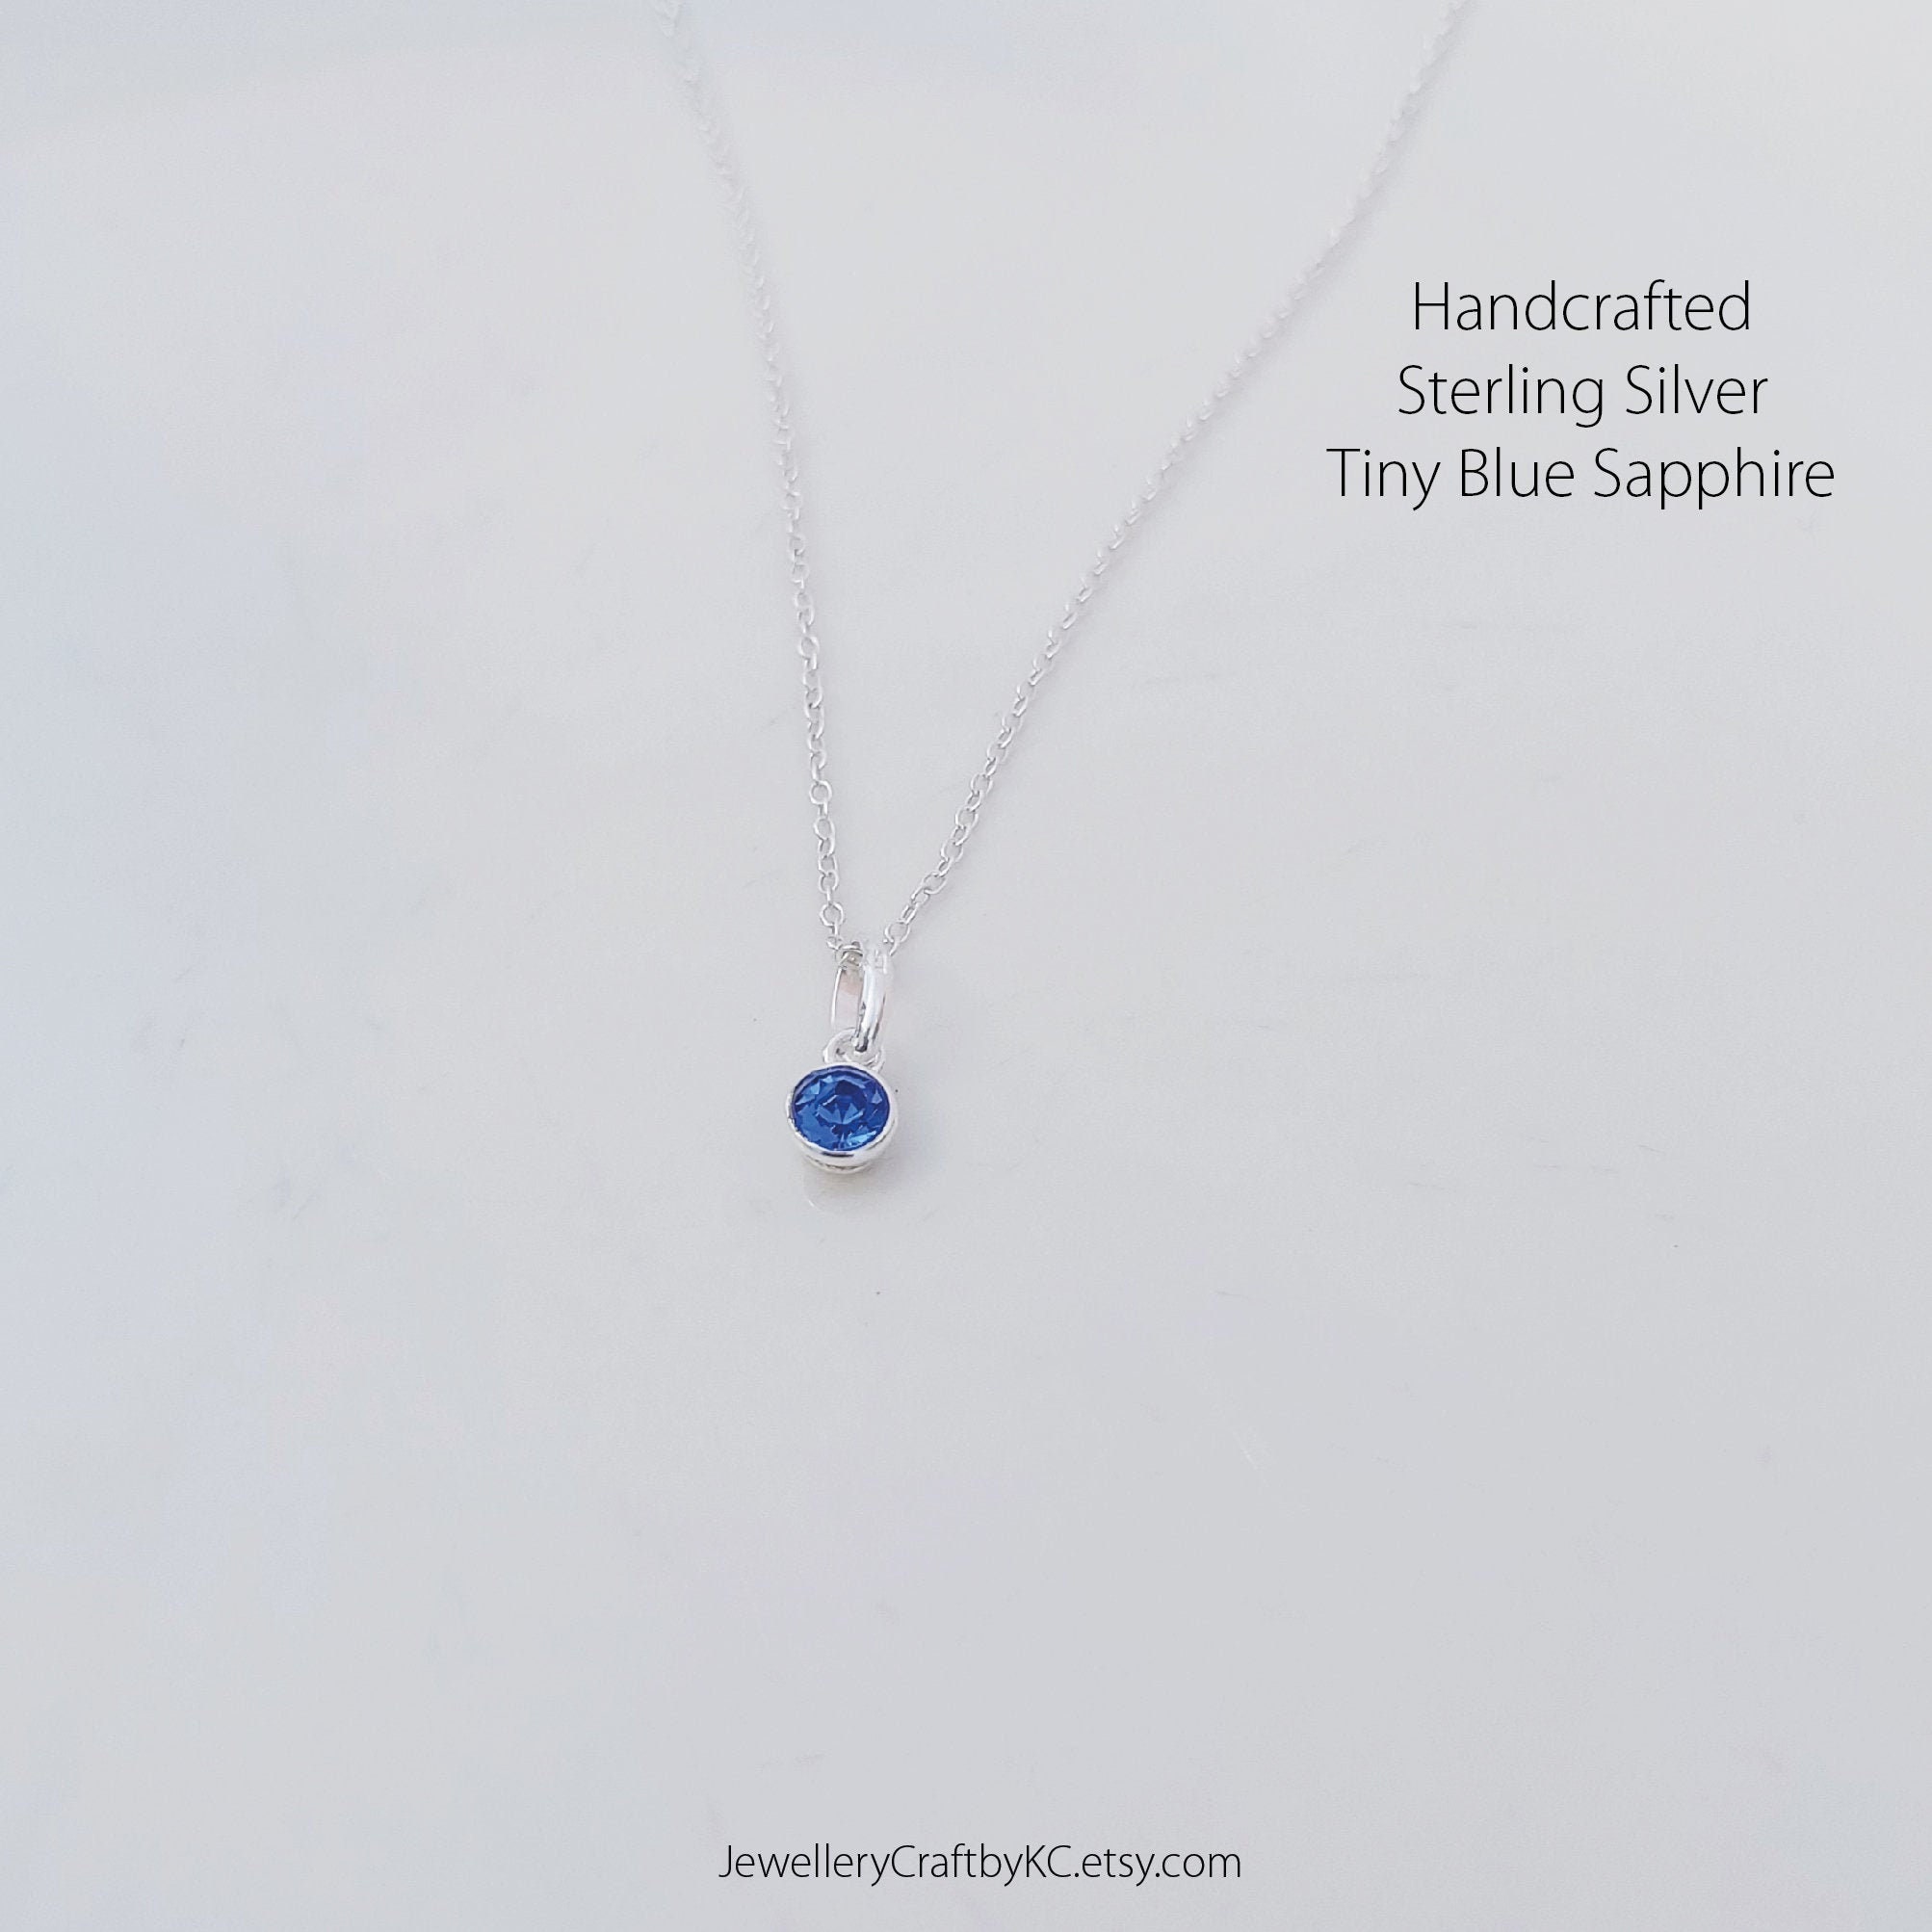 Greenwich Flower Sapphire & Diamond Necklace and Earrings Set in 14k G